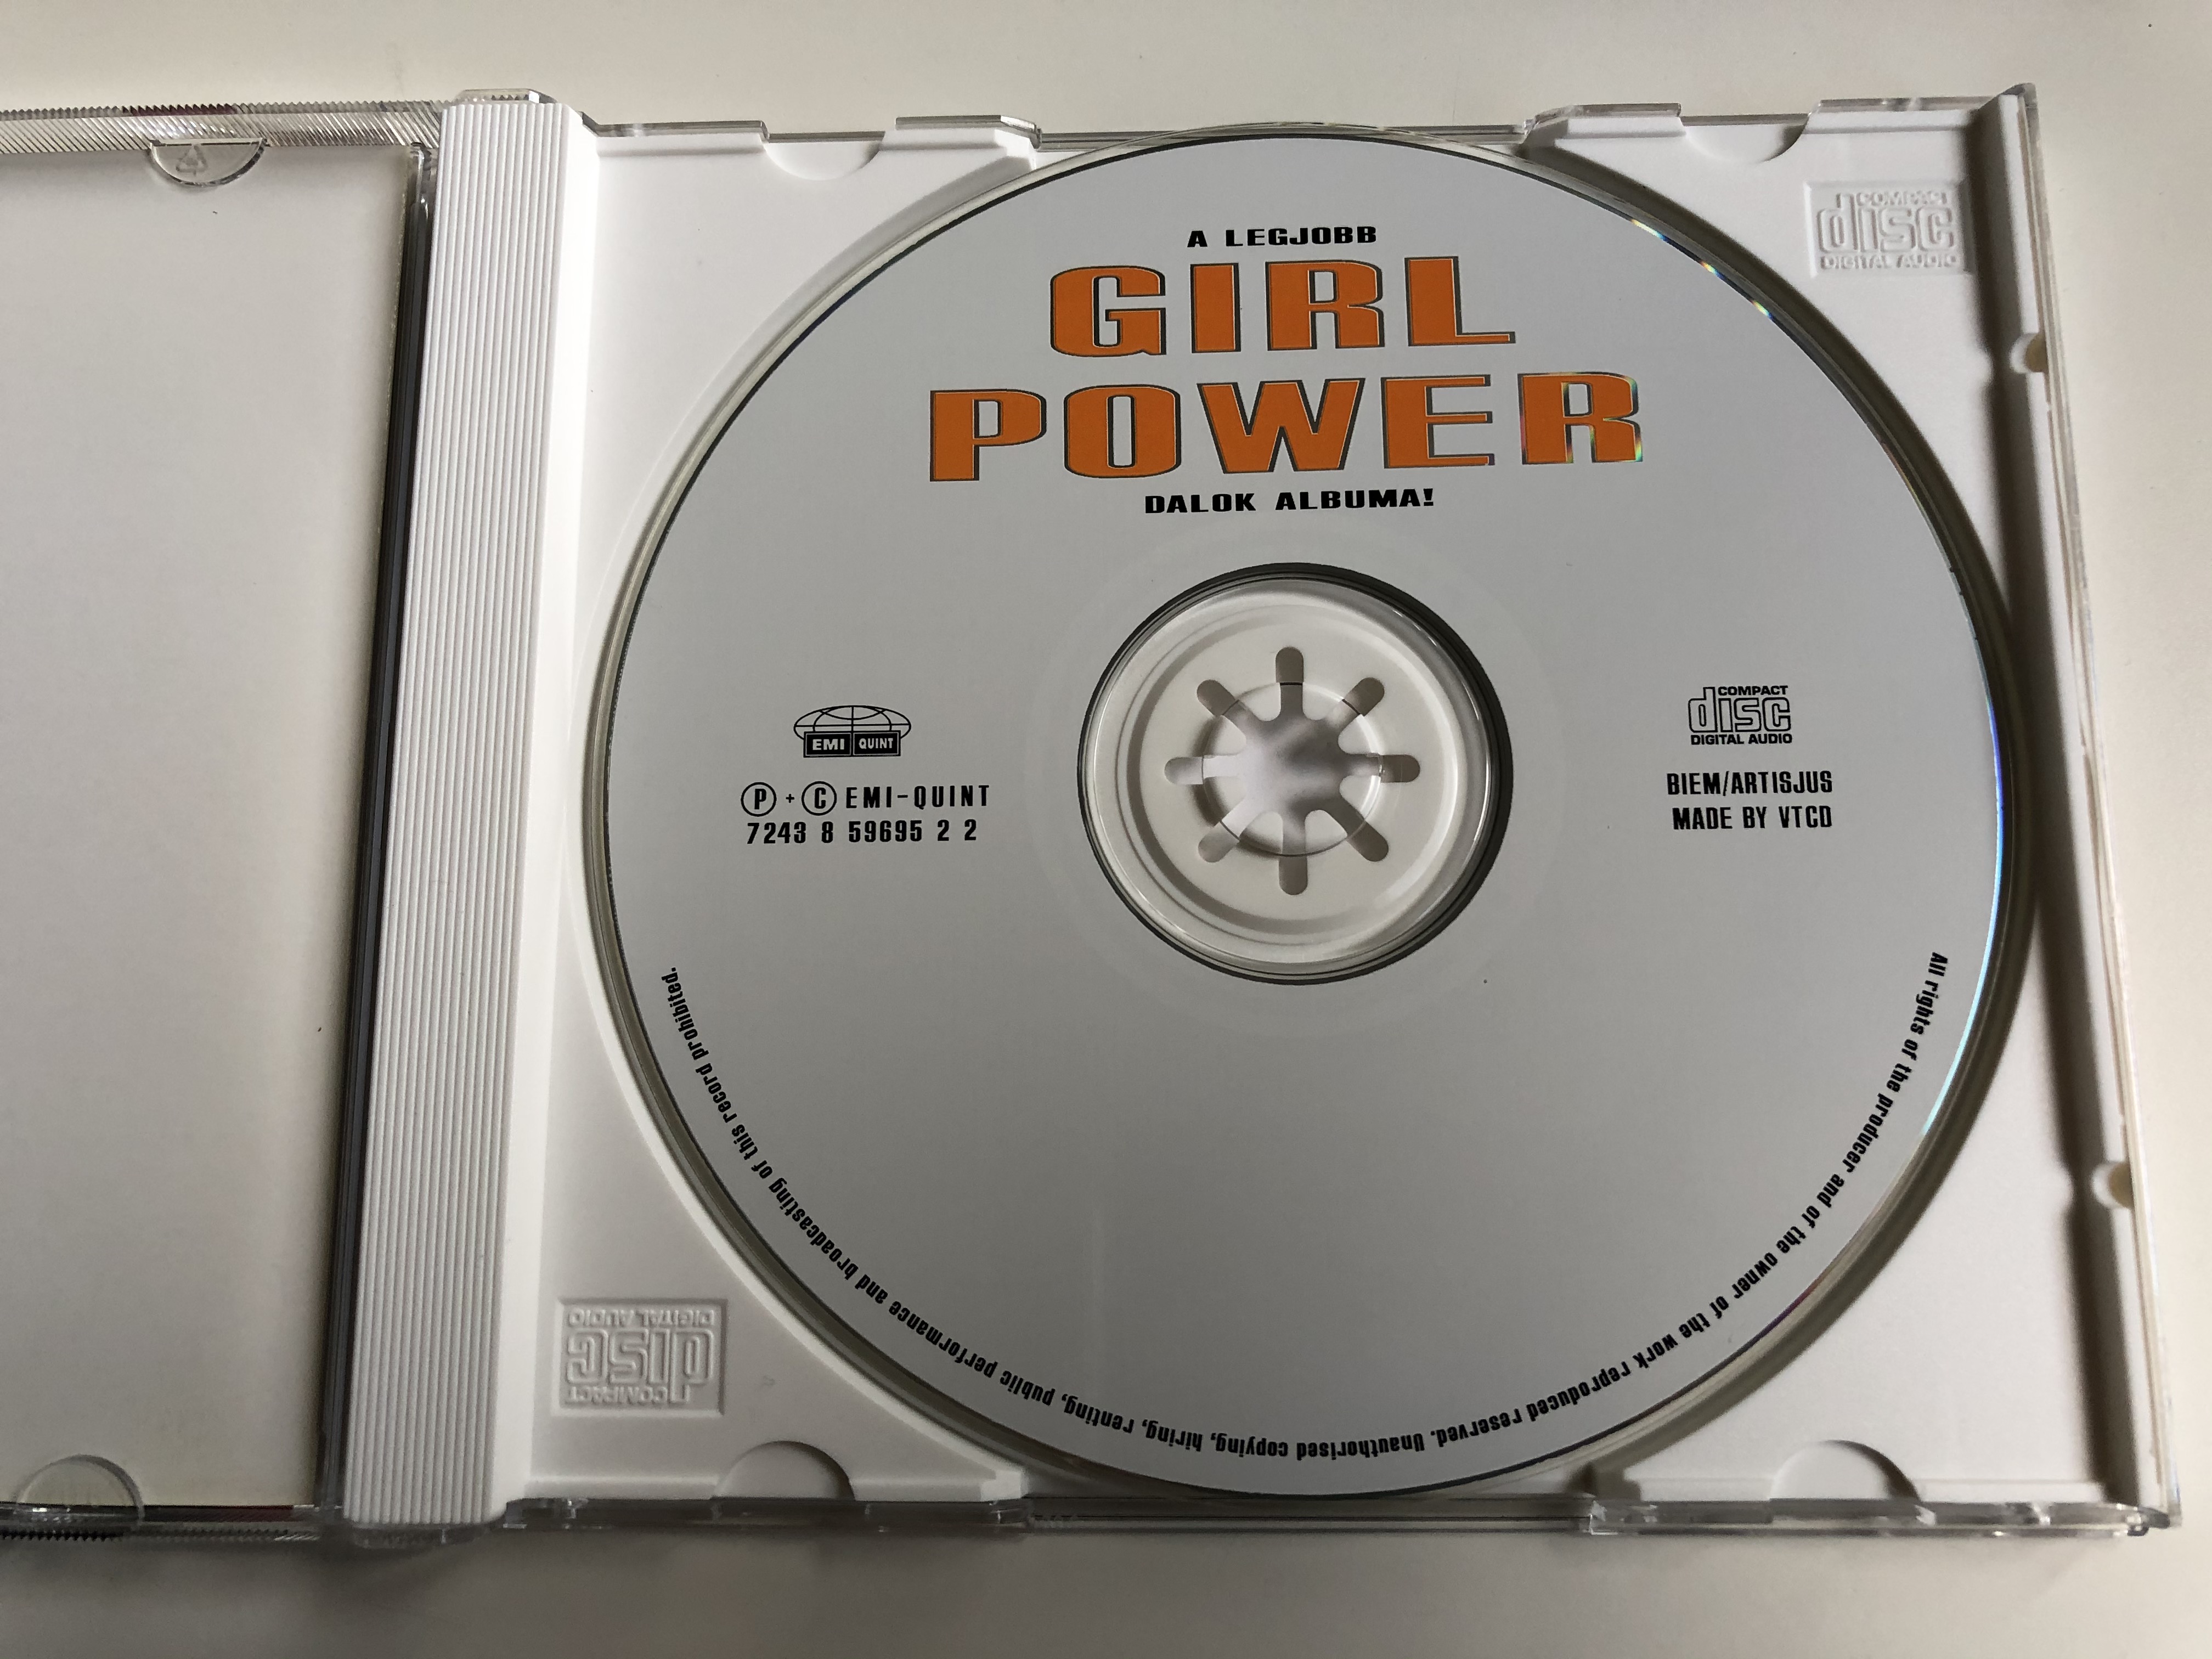 a-spice-girls-bemutatja...-a-legjobb-girl-power-dalok-albumat-emi-quint-audio-cd-7243-8-59695-2-2-4-.jpg